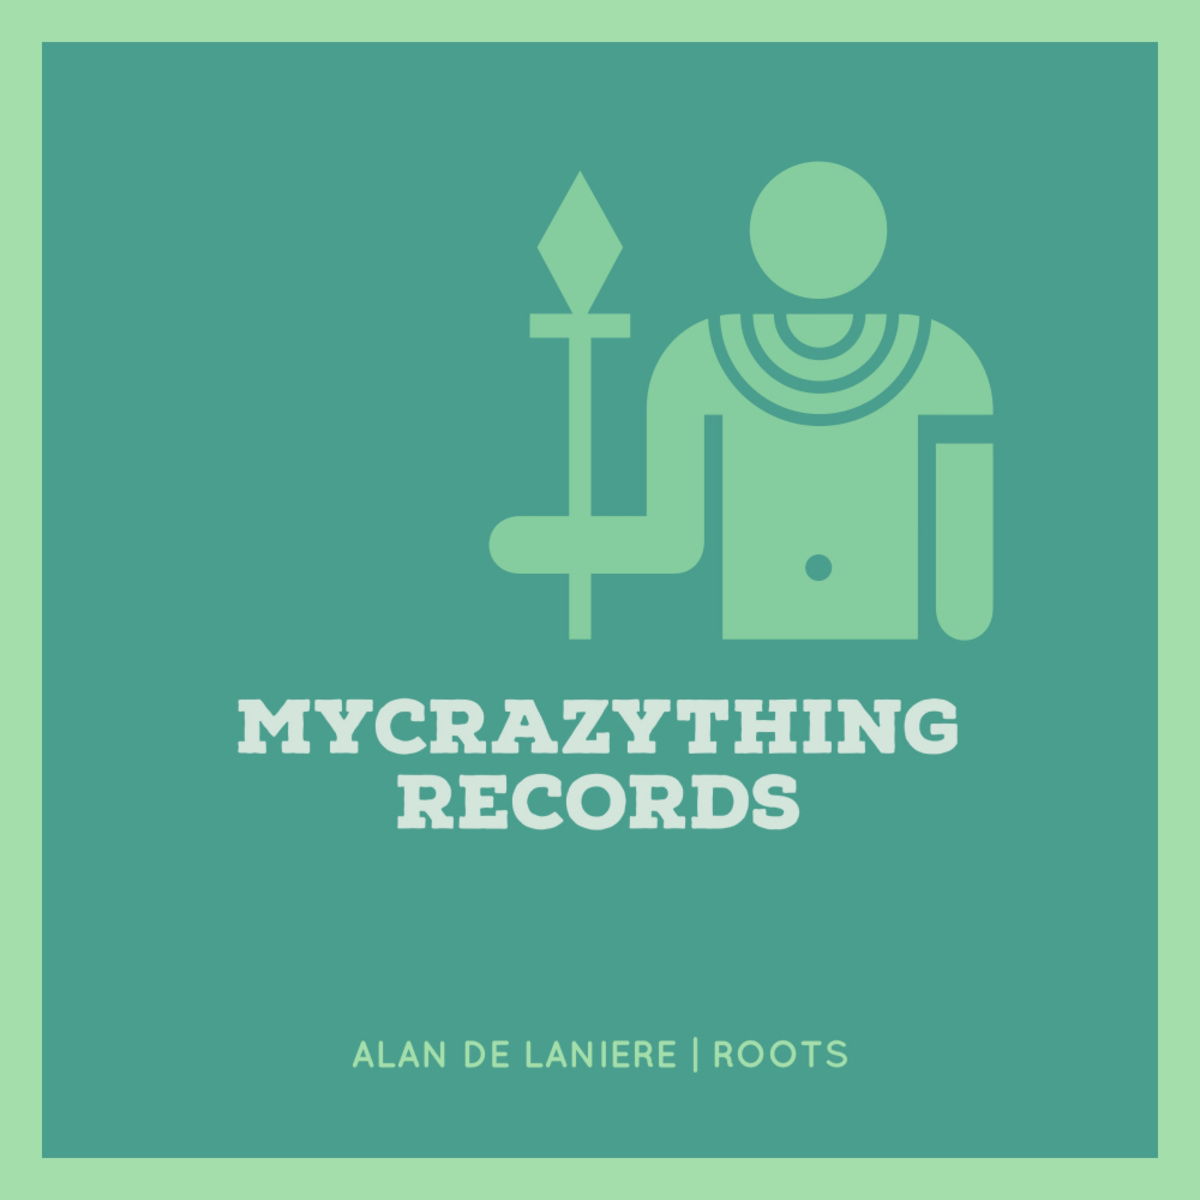 Alan De Laniere - Roots / Mycrazything Records